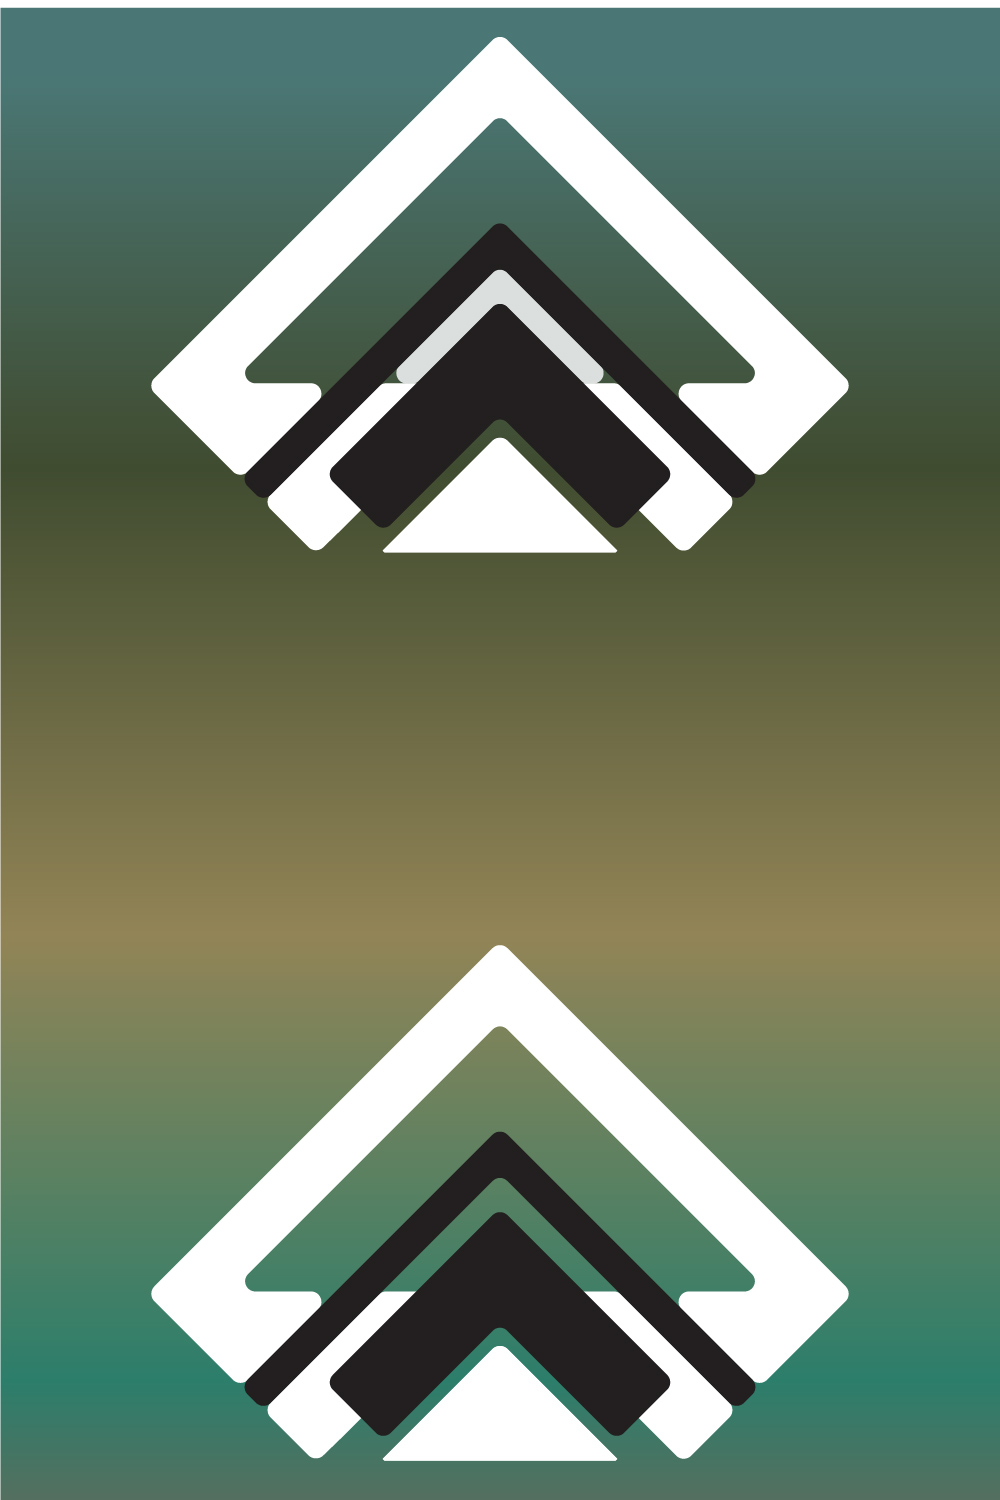 Triangle shape logo design for companies pint.